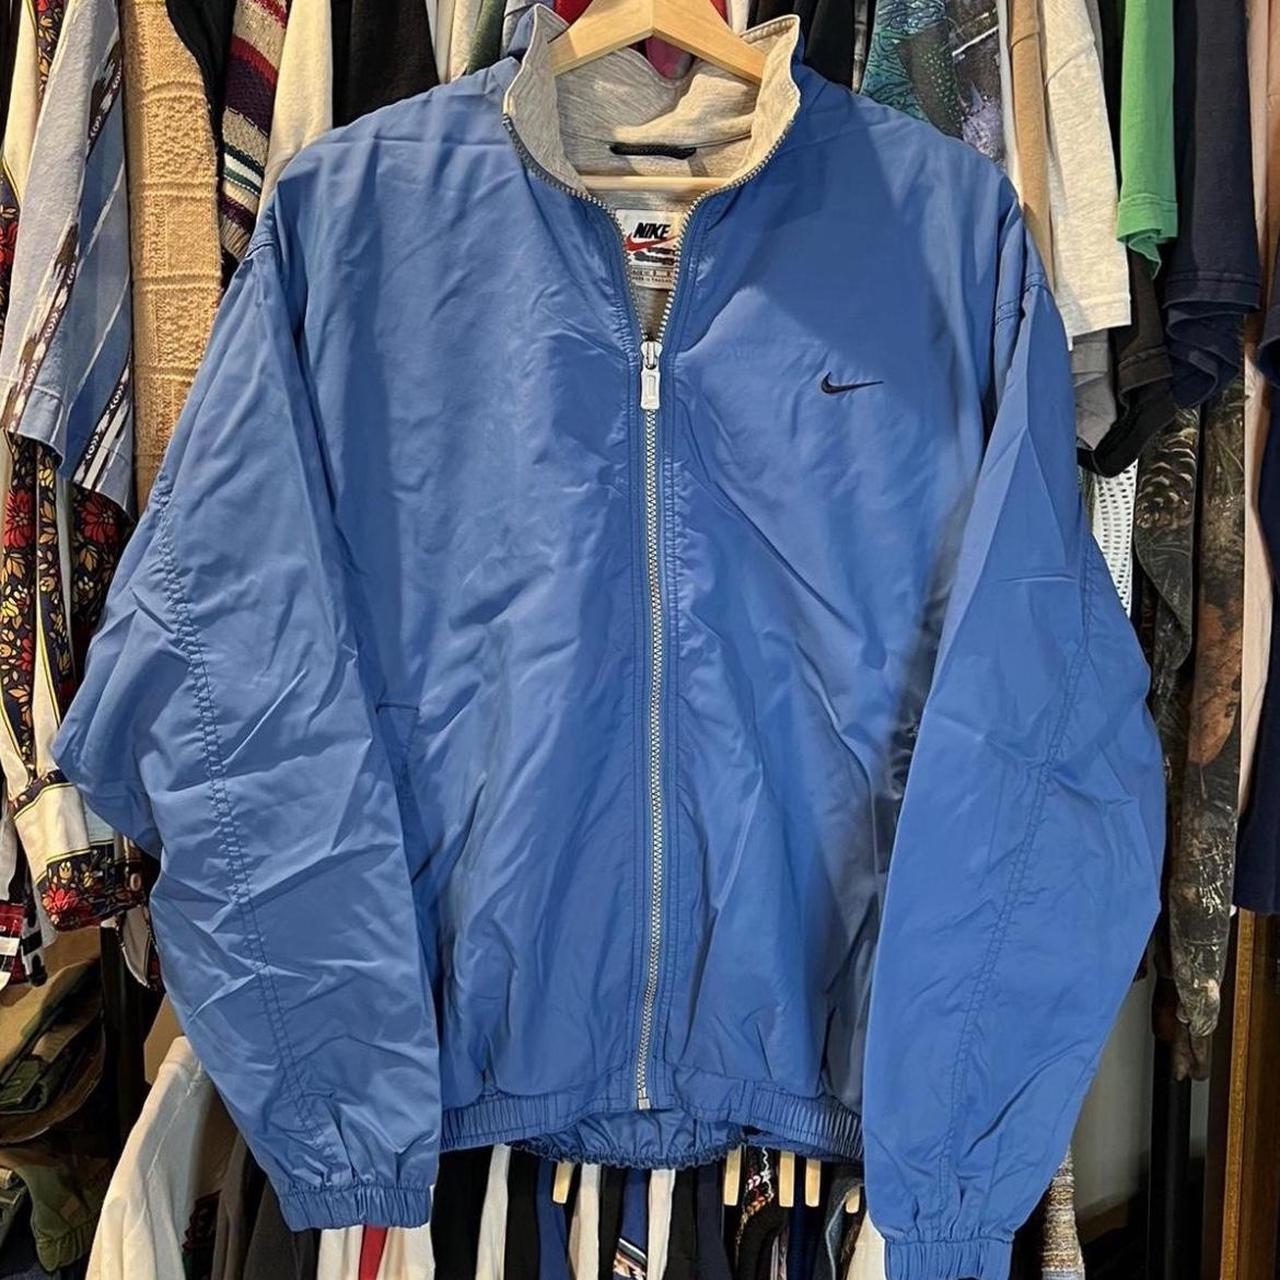 Adult 90s Windbreaker Jacket